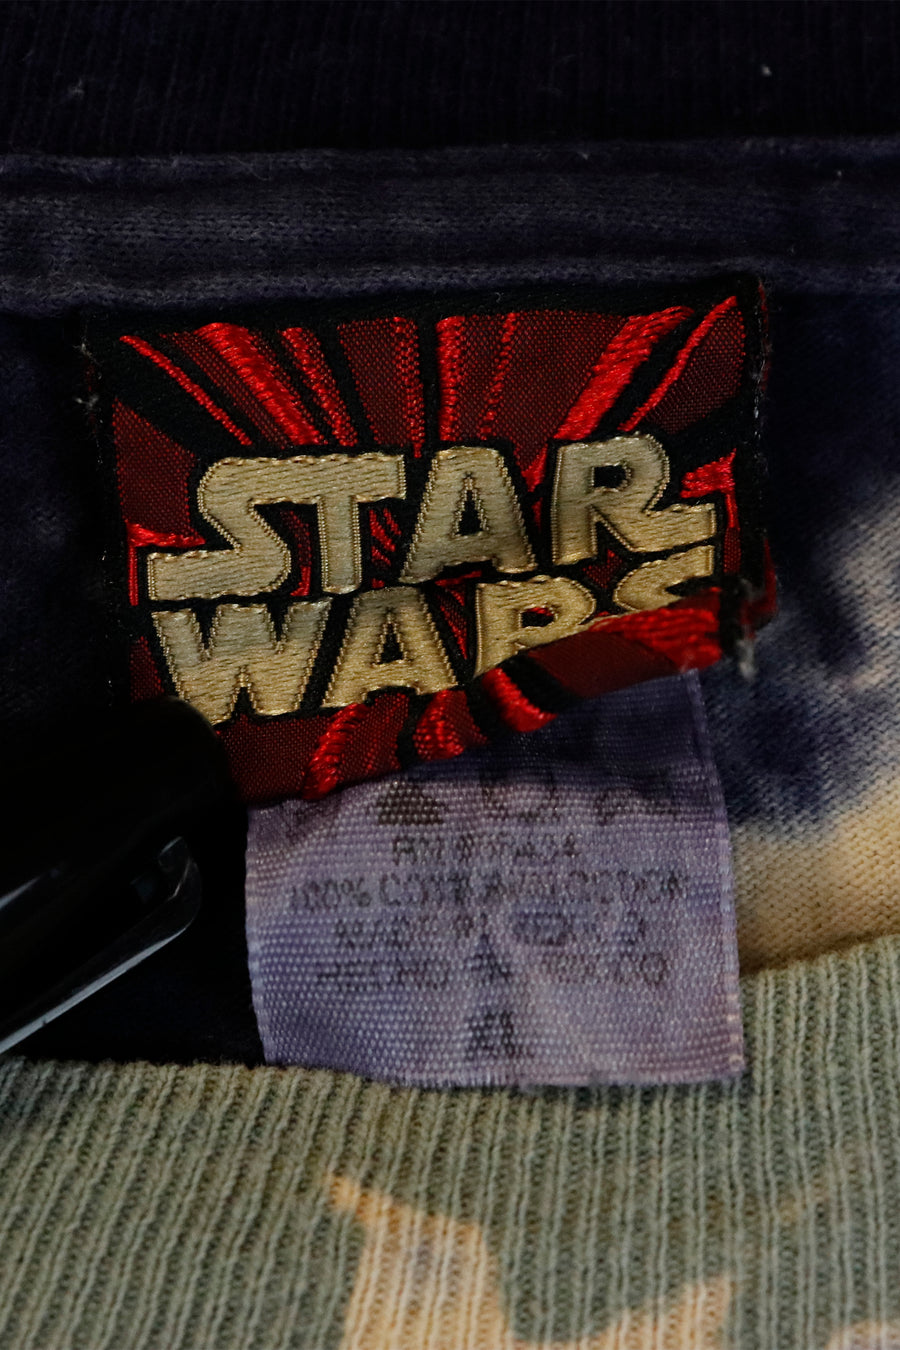 Vintage Star Wars Darth Mall Tie Dye Graphic T Shirt Sz XL